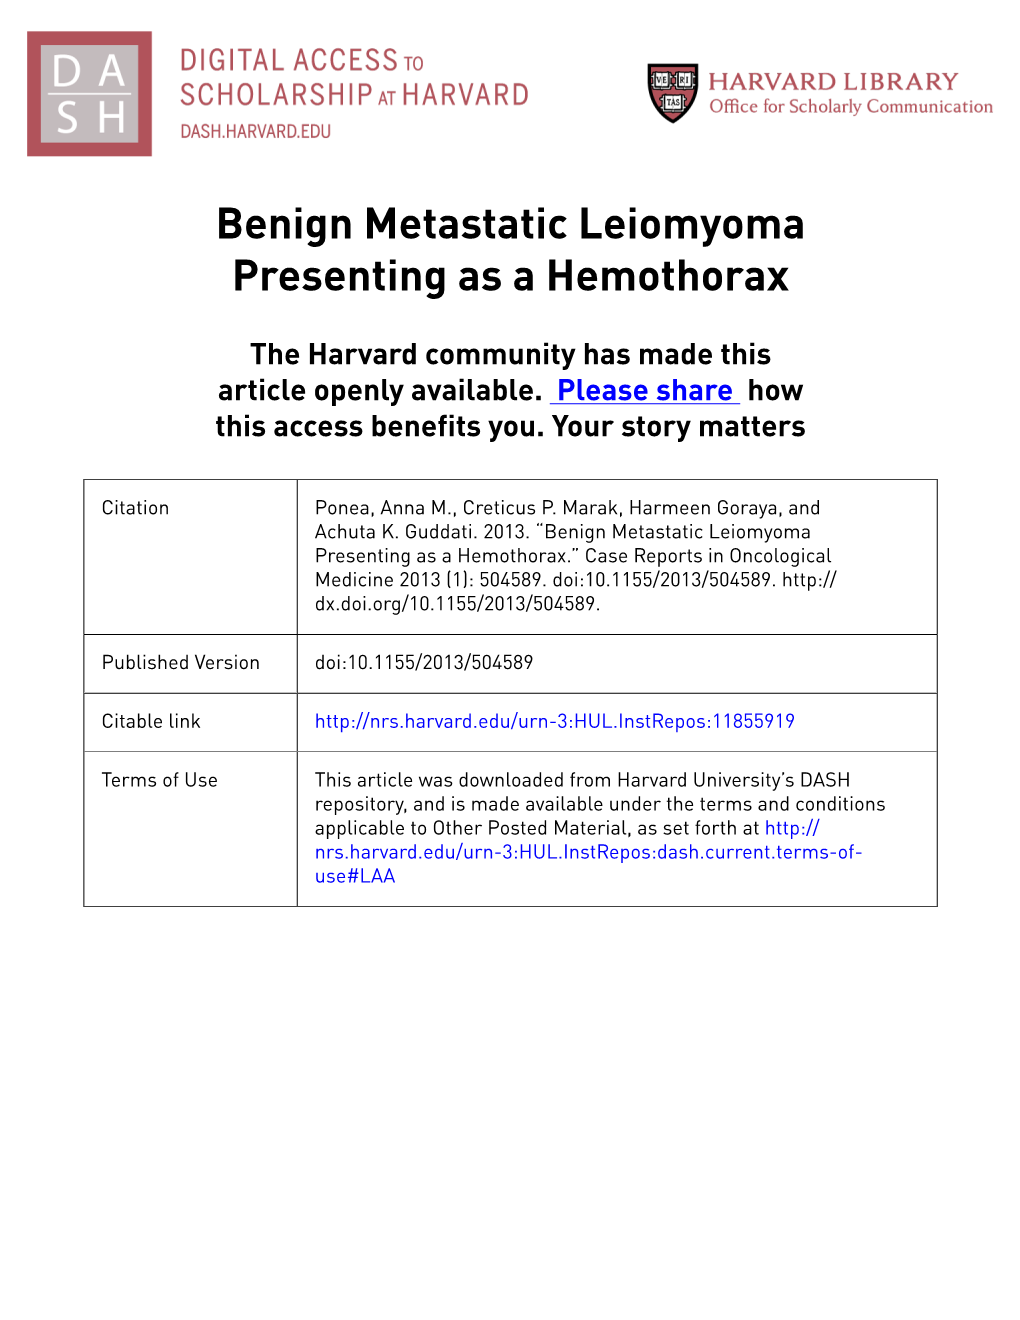 Benign Metastatic Leiomyoma Presenting As a Hemothorax